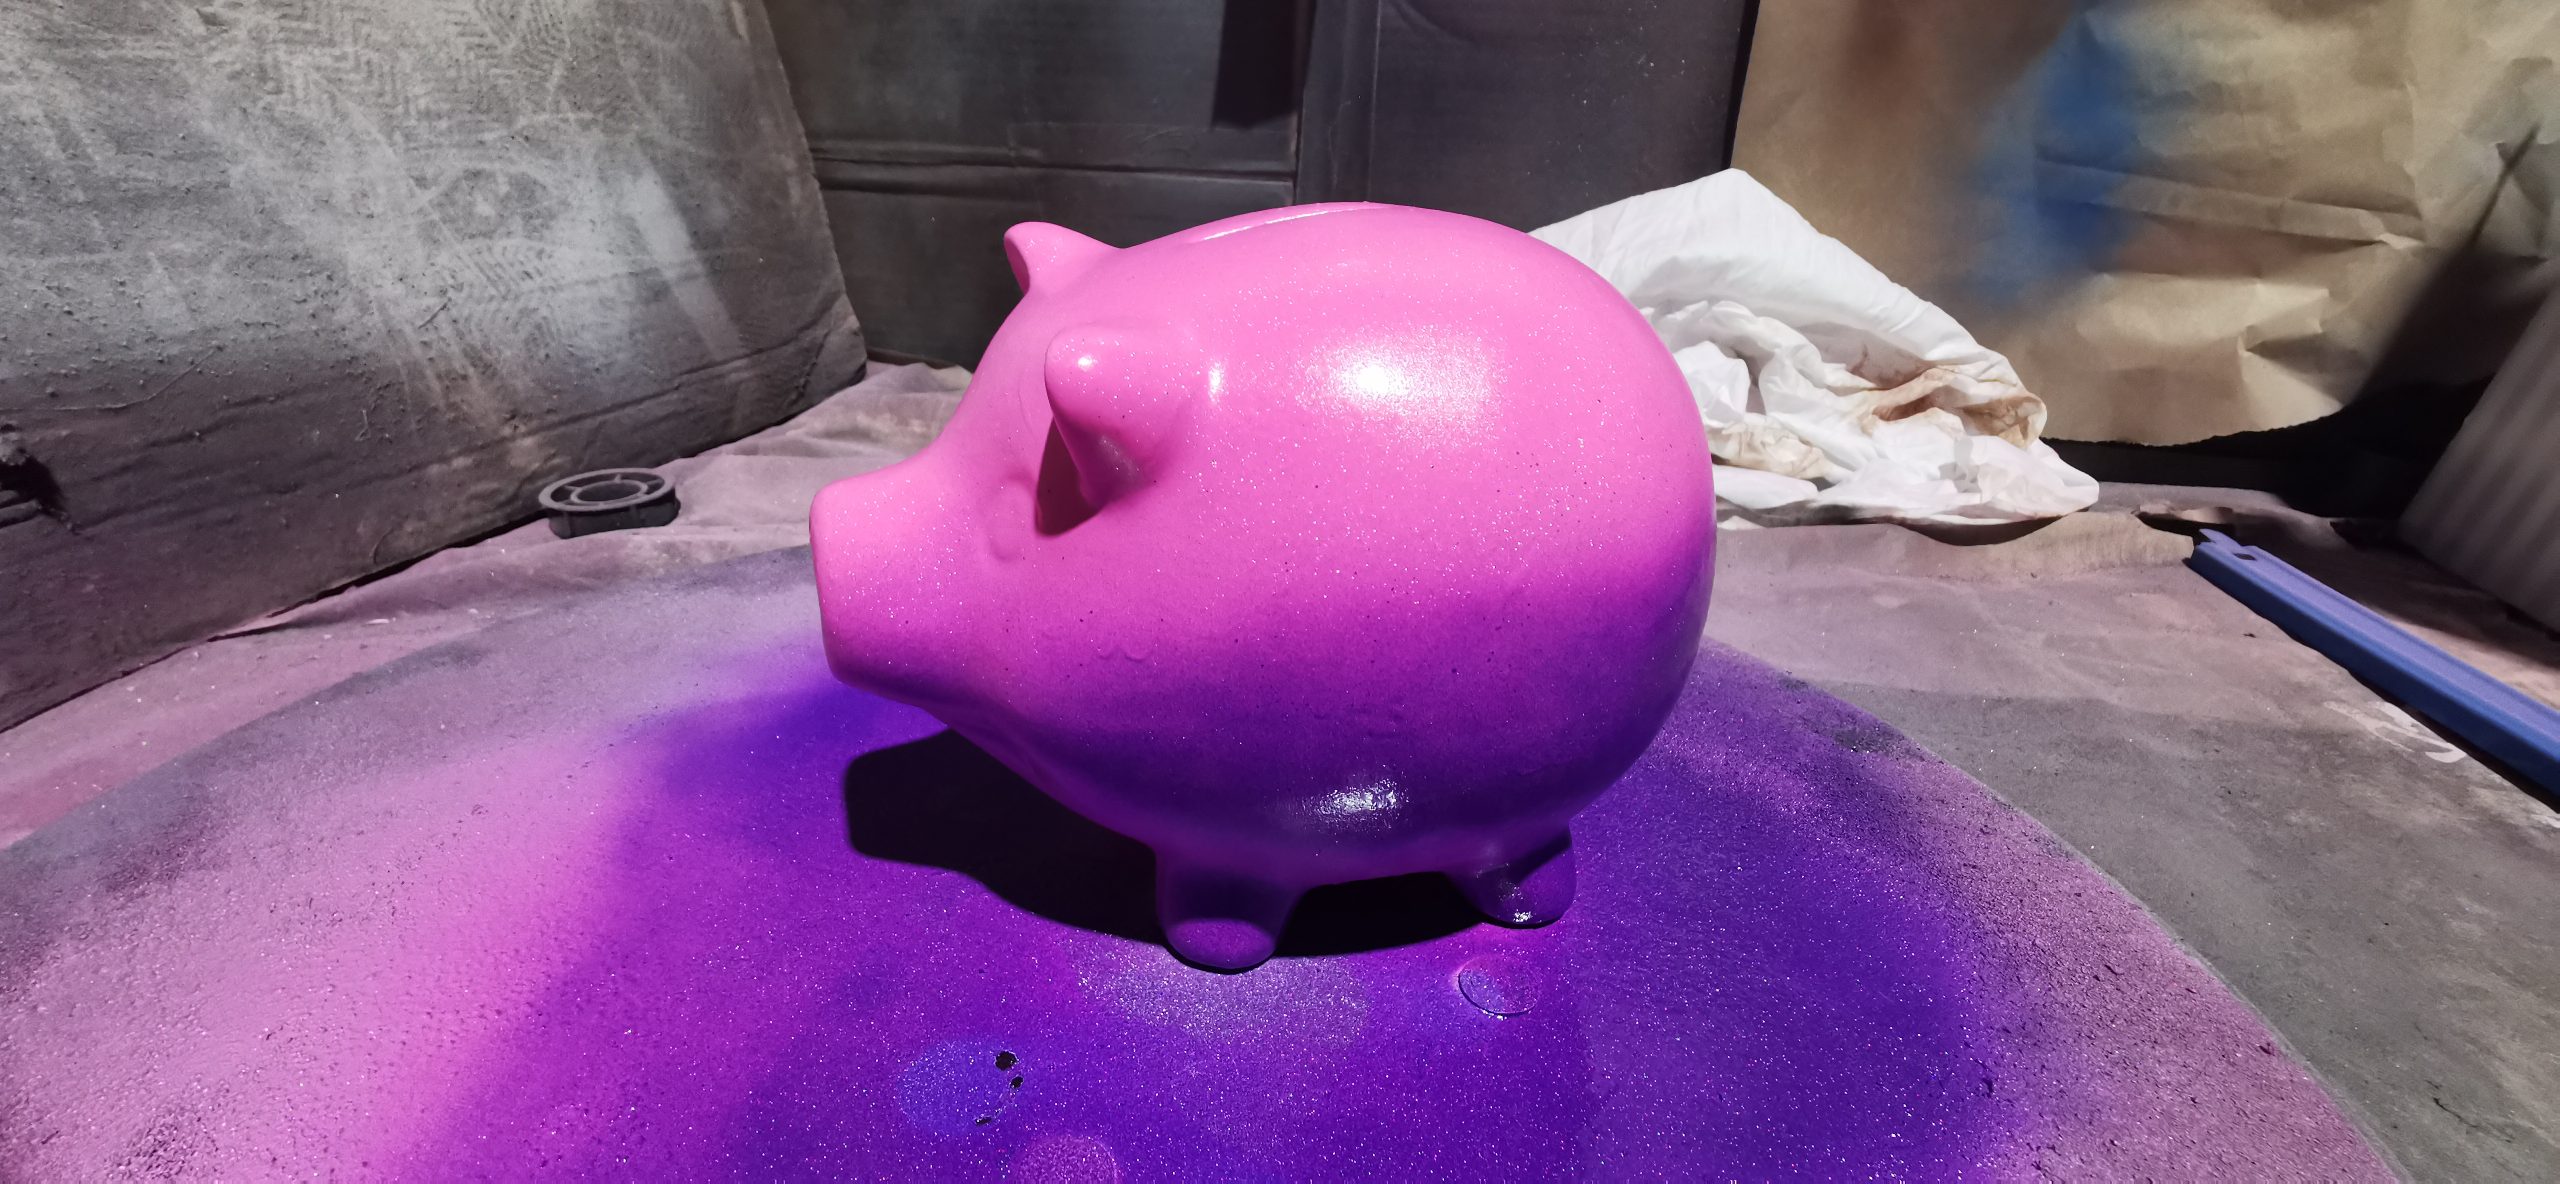 painting pig purple